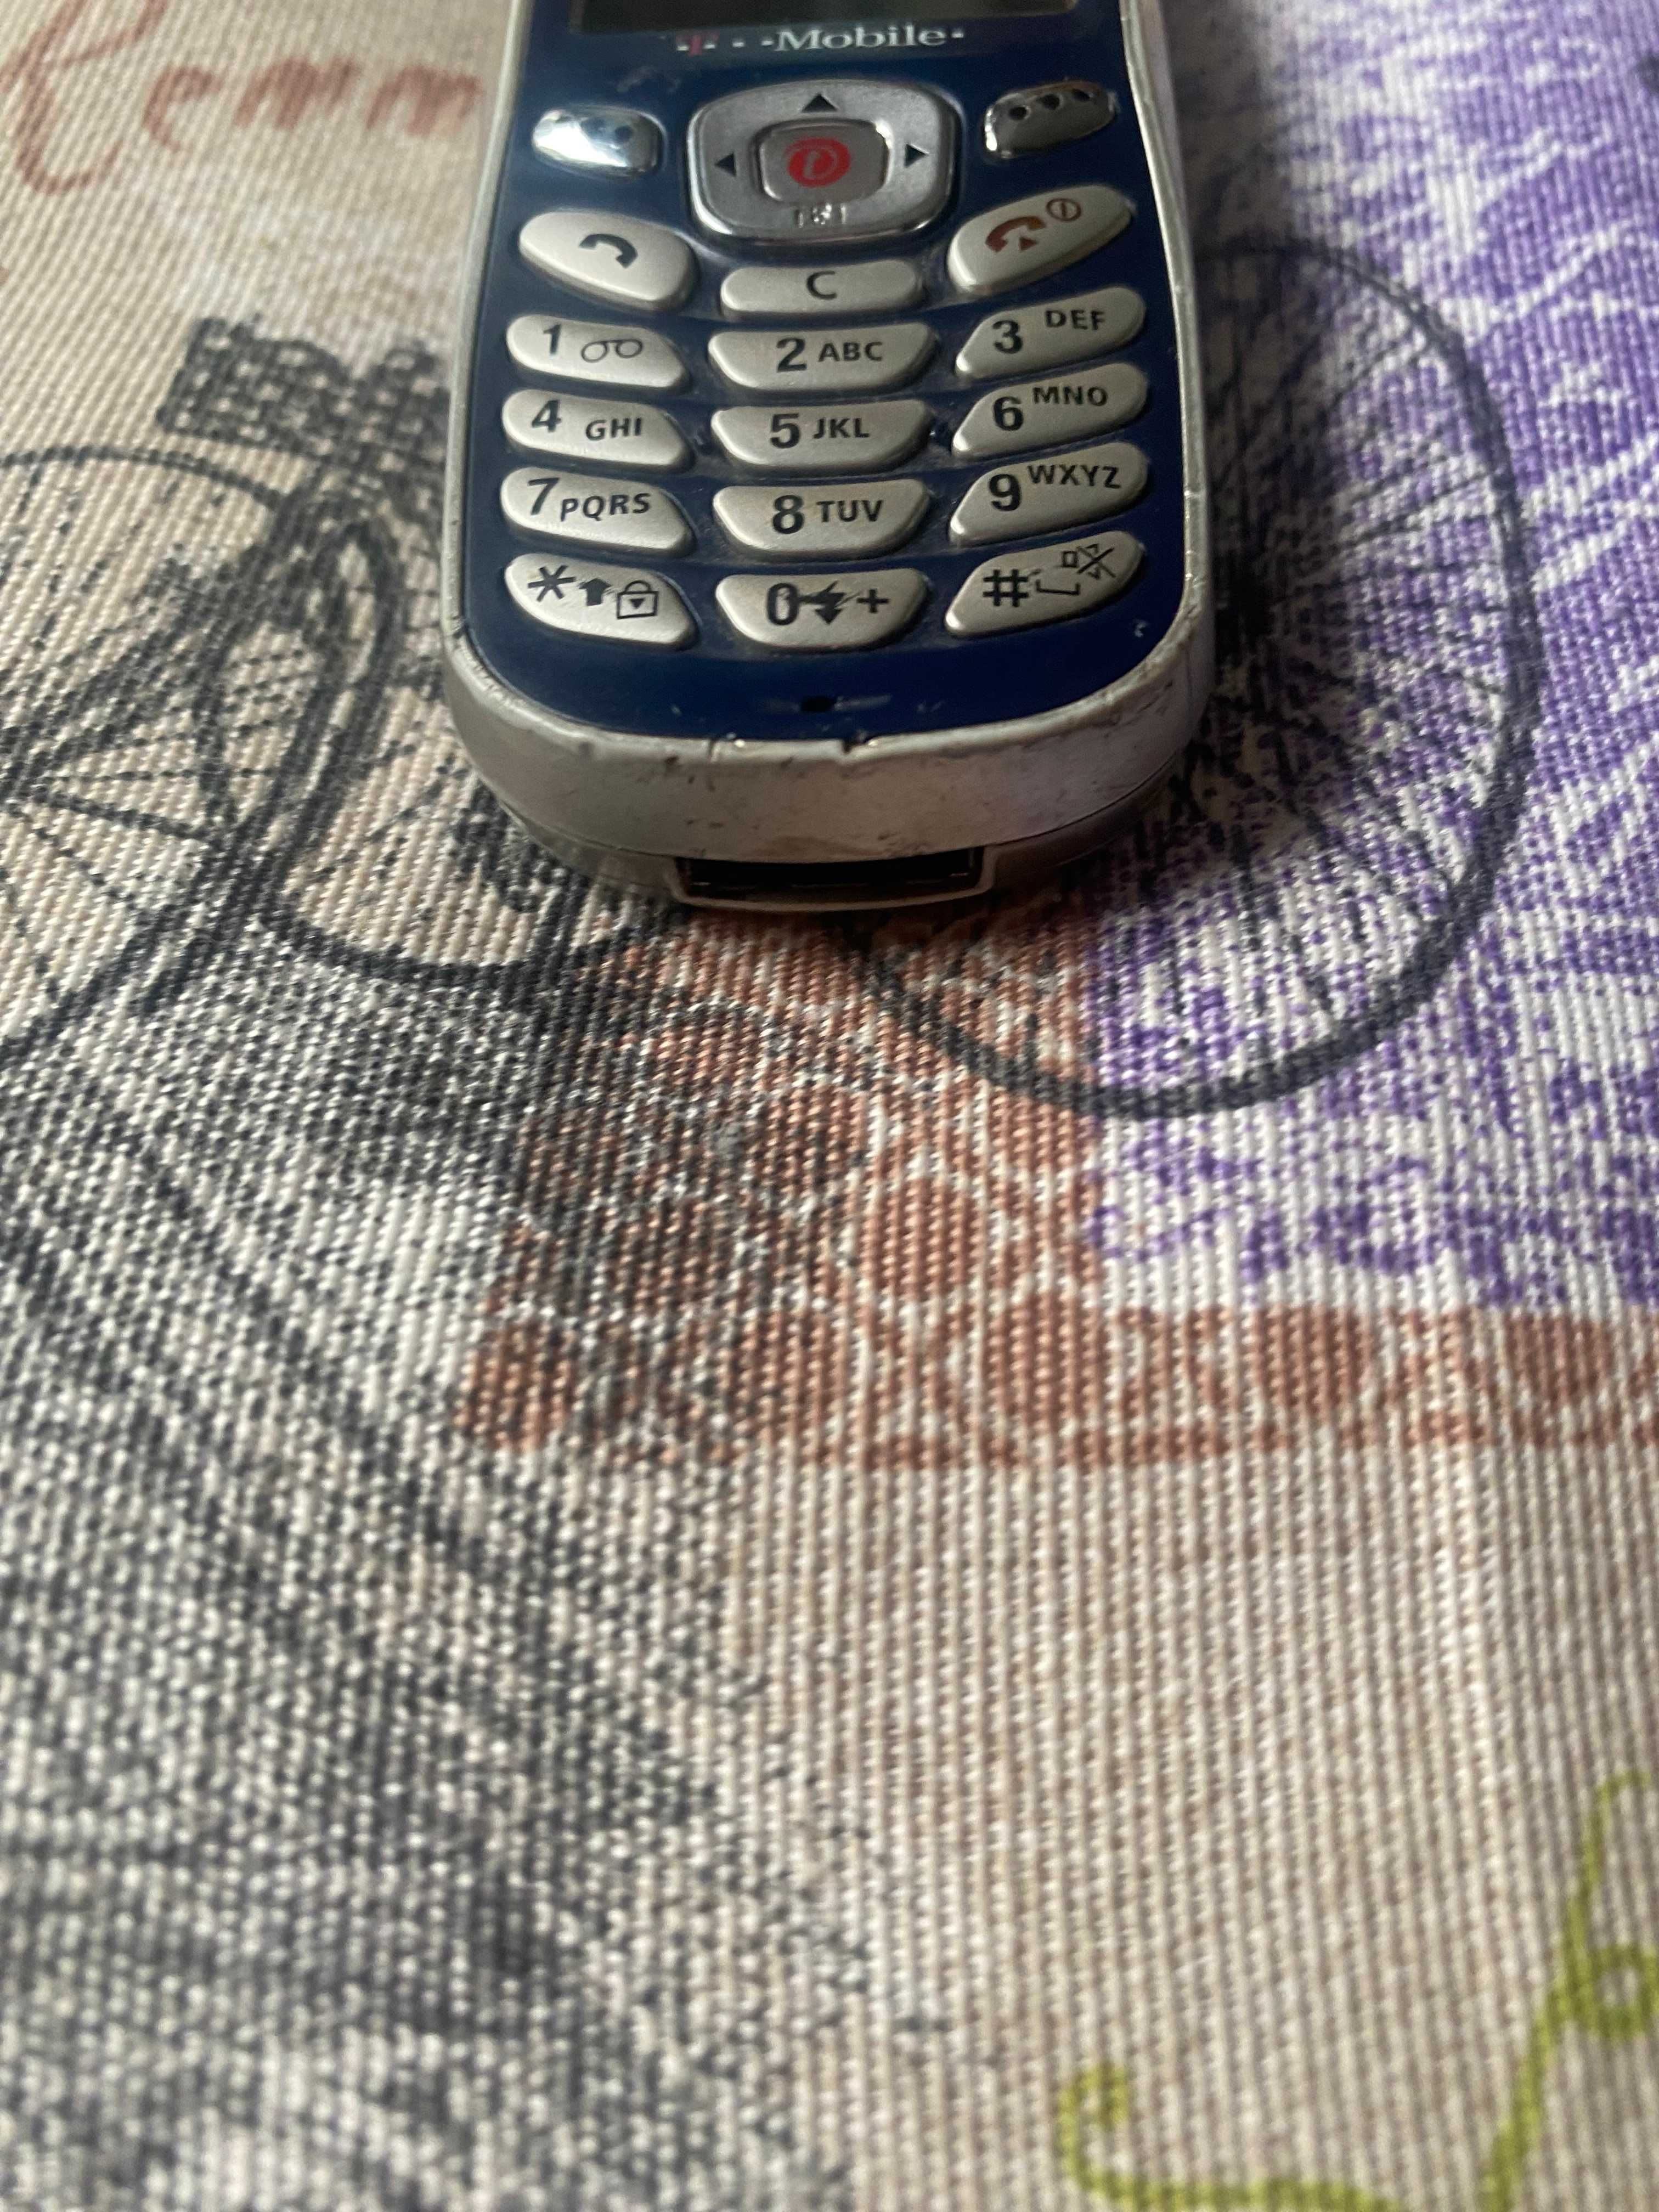 Samsung x600 телефон